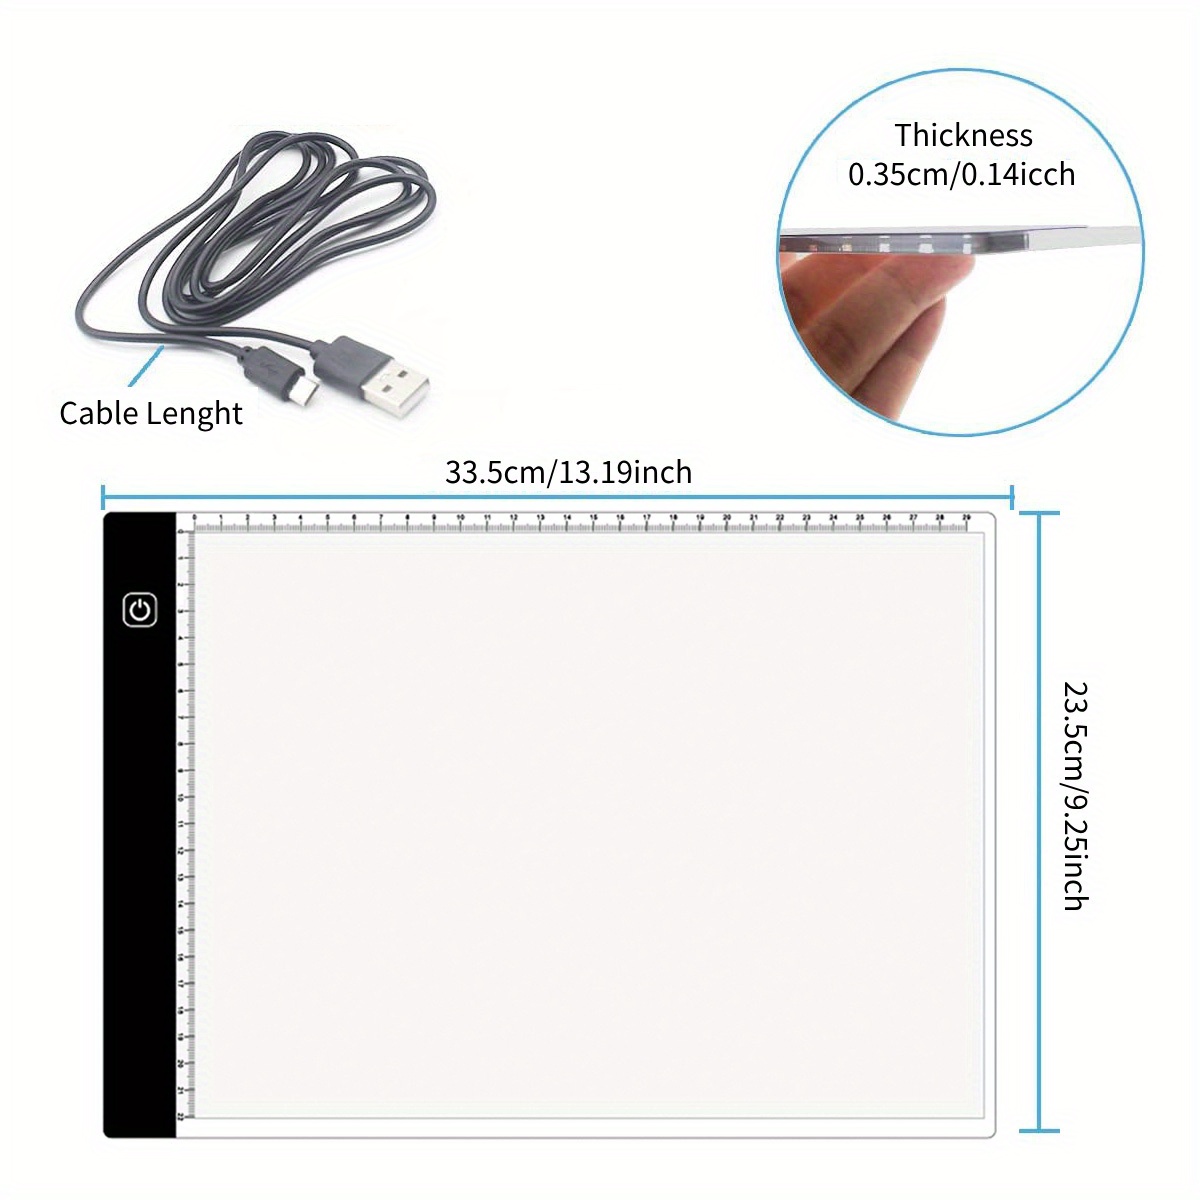 LED Drawing Board A4 - Ultra-Thin Tracing Light Pad